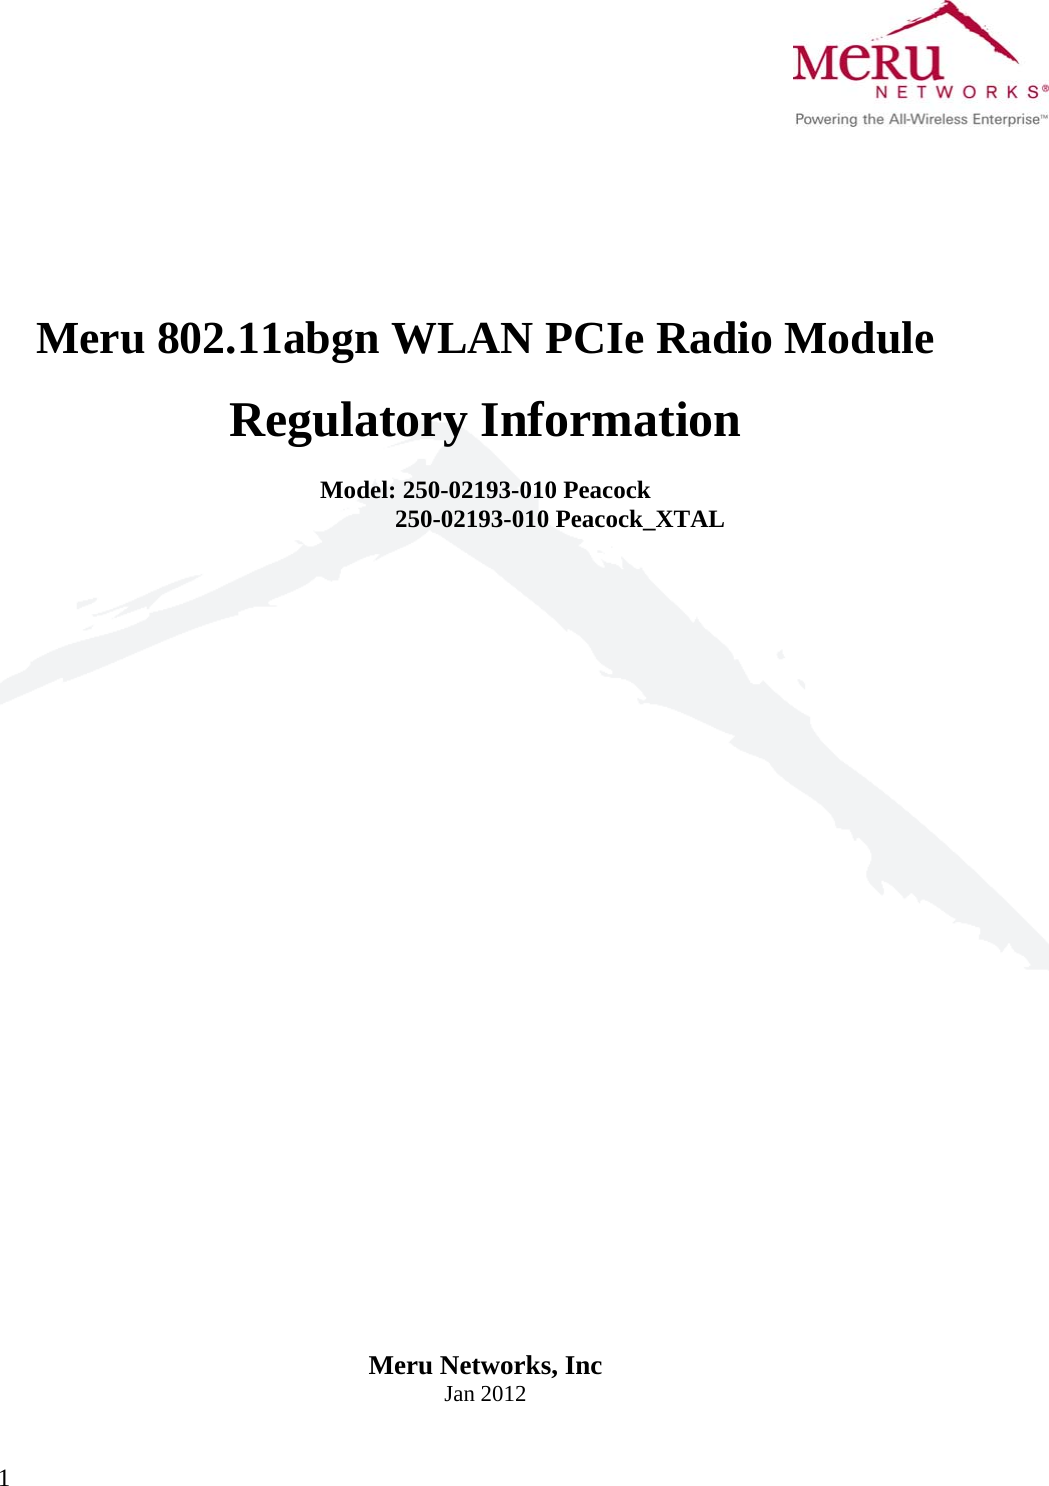  1          Meru 802.11abgn WLAN PCIe Radio Module  Regulatory Information  Model: 250-02193-010 Peacock               250-02193-010 Peacock_XTAL                                Meru Networks, Inc Jan 2012   